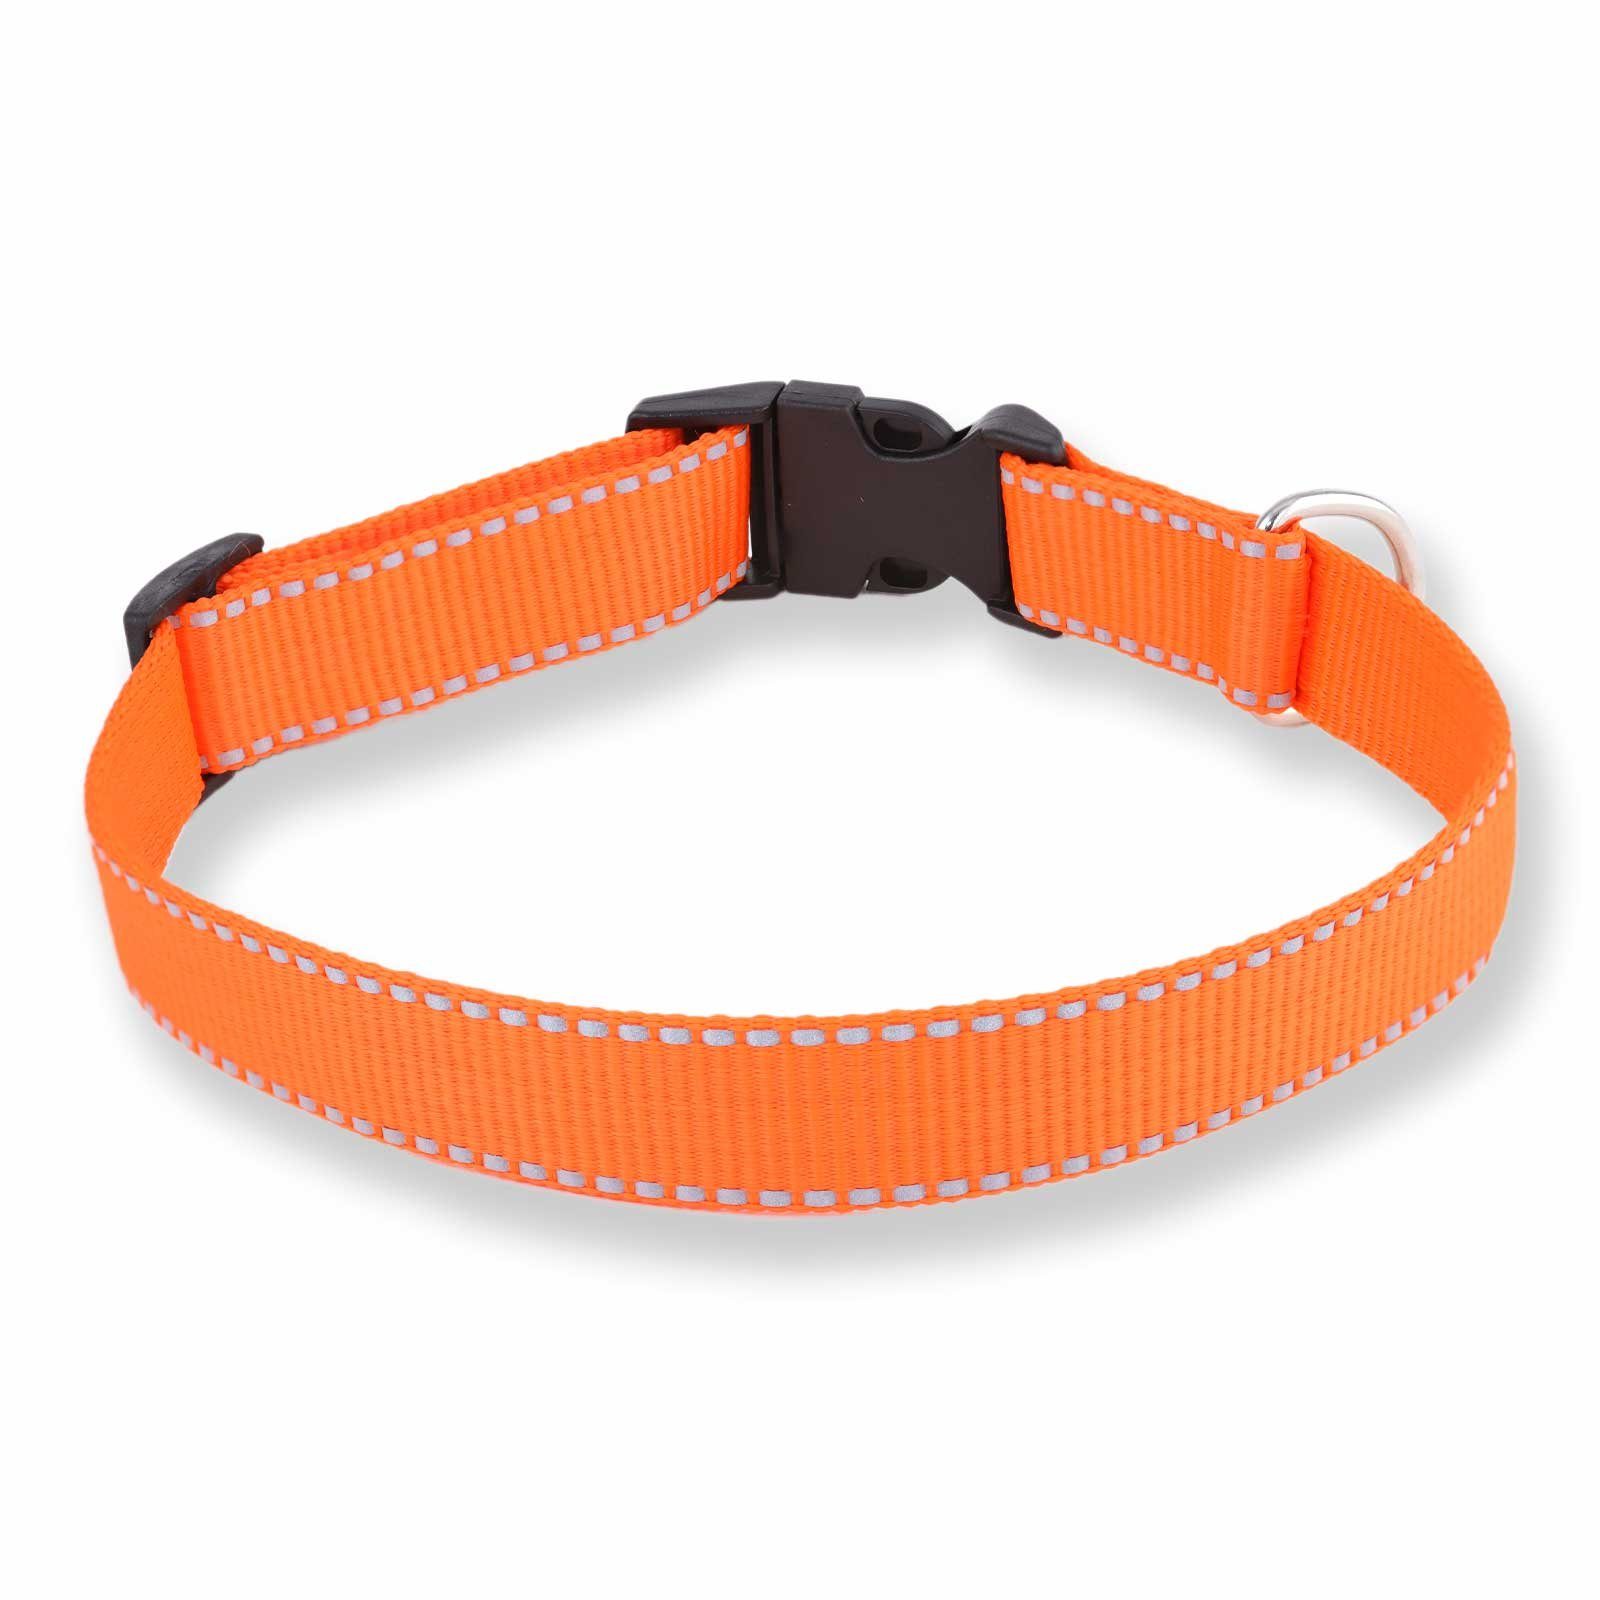 Monkimau Hunde-Halsband Hundehalsband aus Nylon orange reflektierend, Nylon, reflektierend